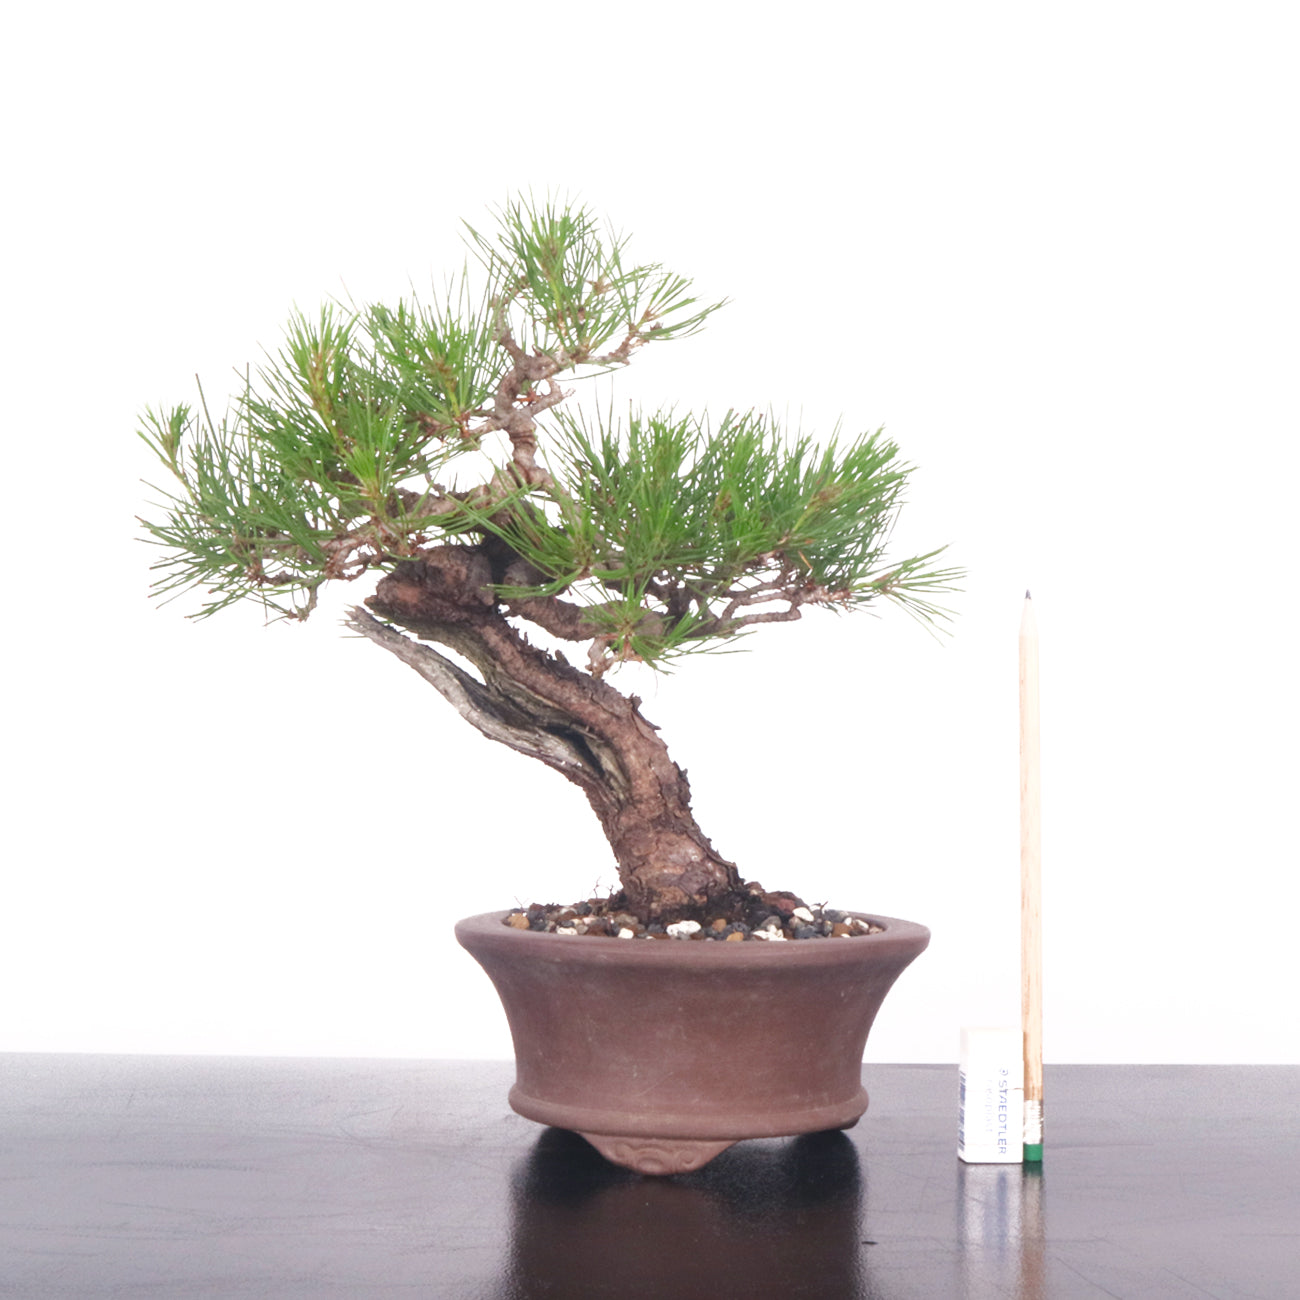 Red Pine Akamatsu Bonsai- Japanese origin